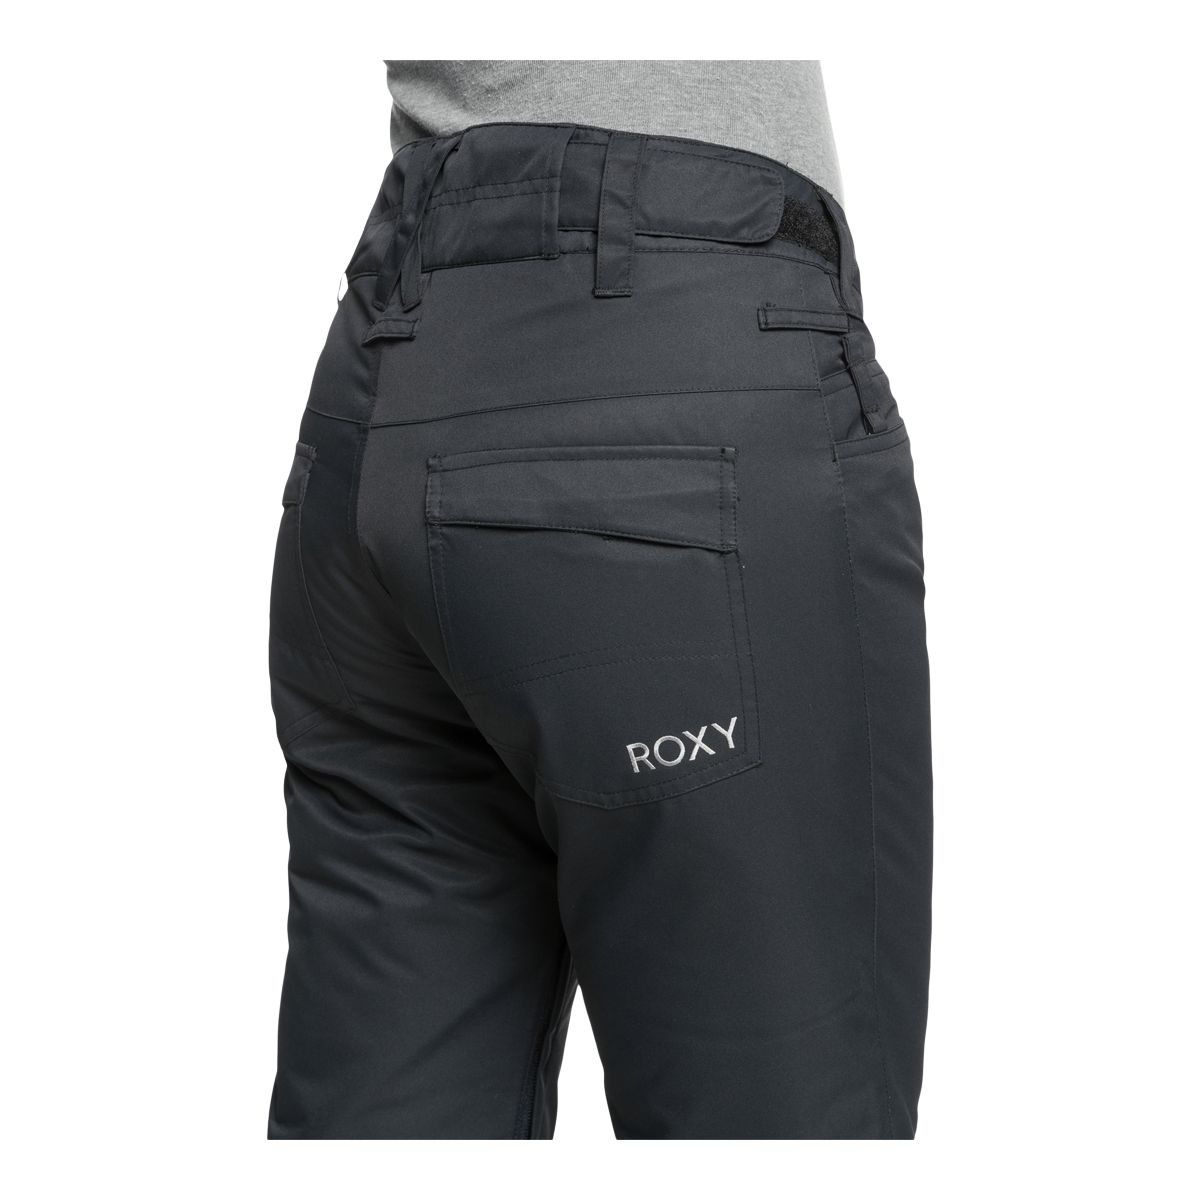 Roxy Women's Backyard Snow Pants, Insulated, Ski, Winter